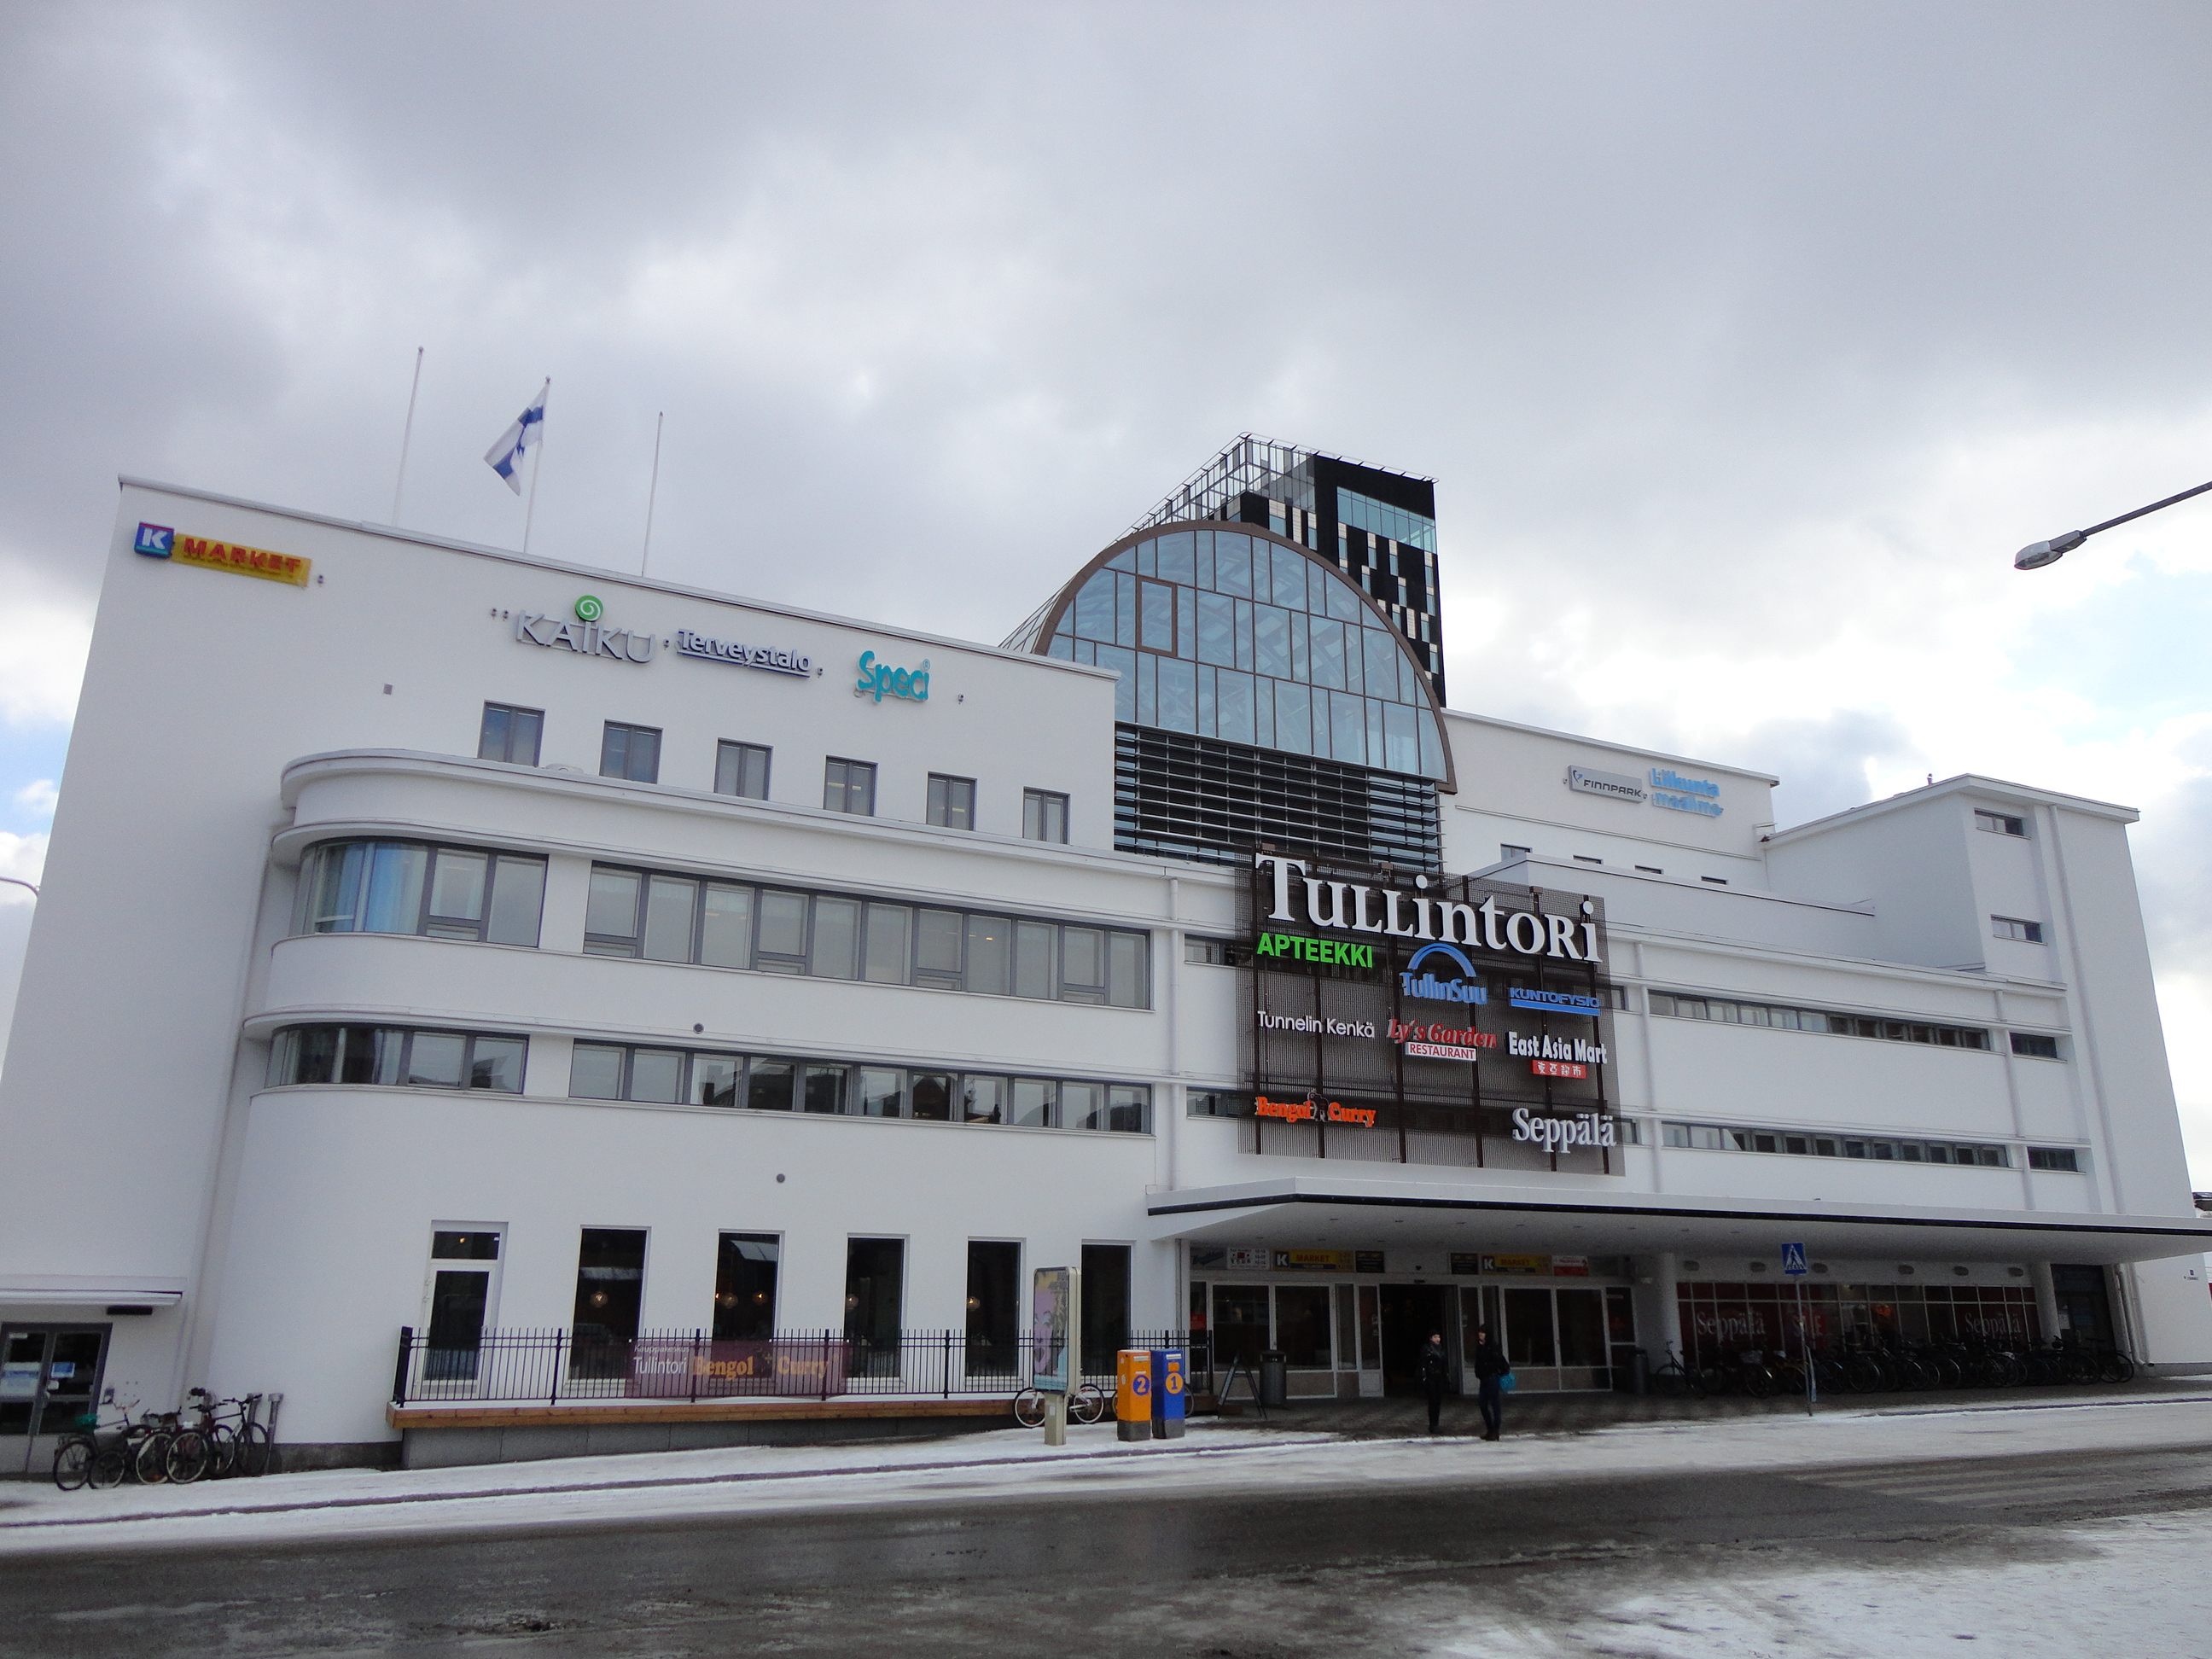 Tullintorin kauppakeskus, Tampere